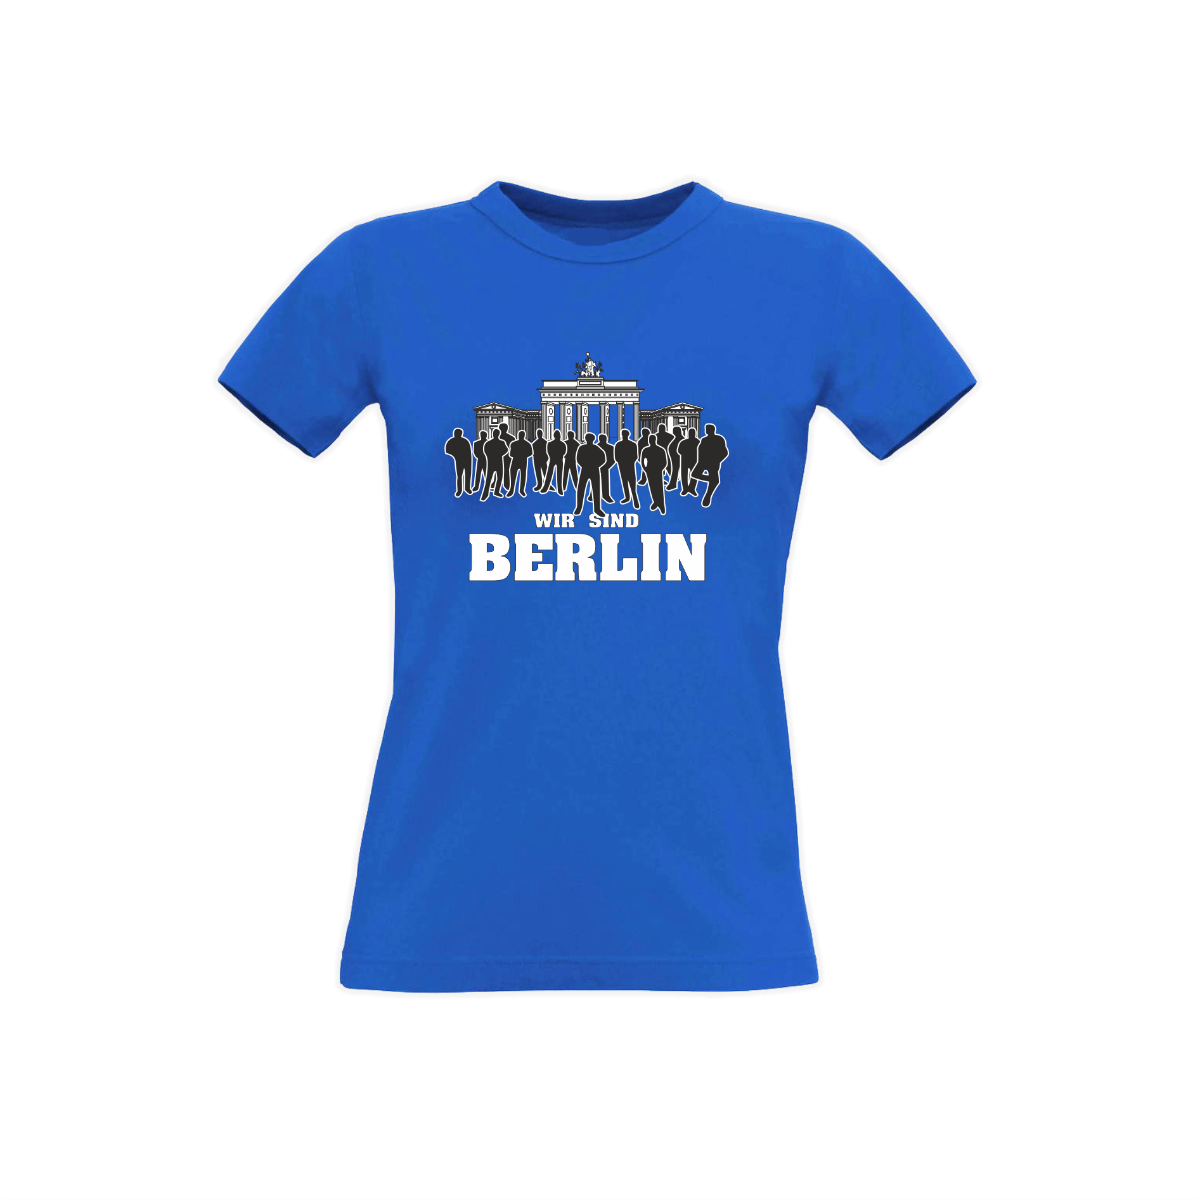 Girly-Shirt "WIR SIND BERLIN" blau